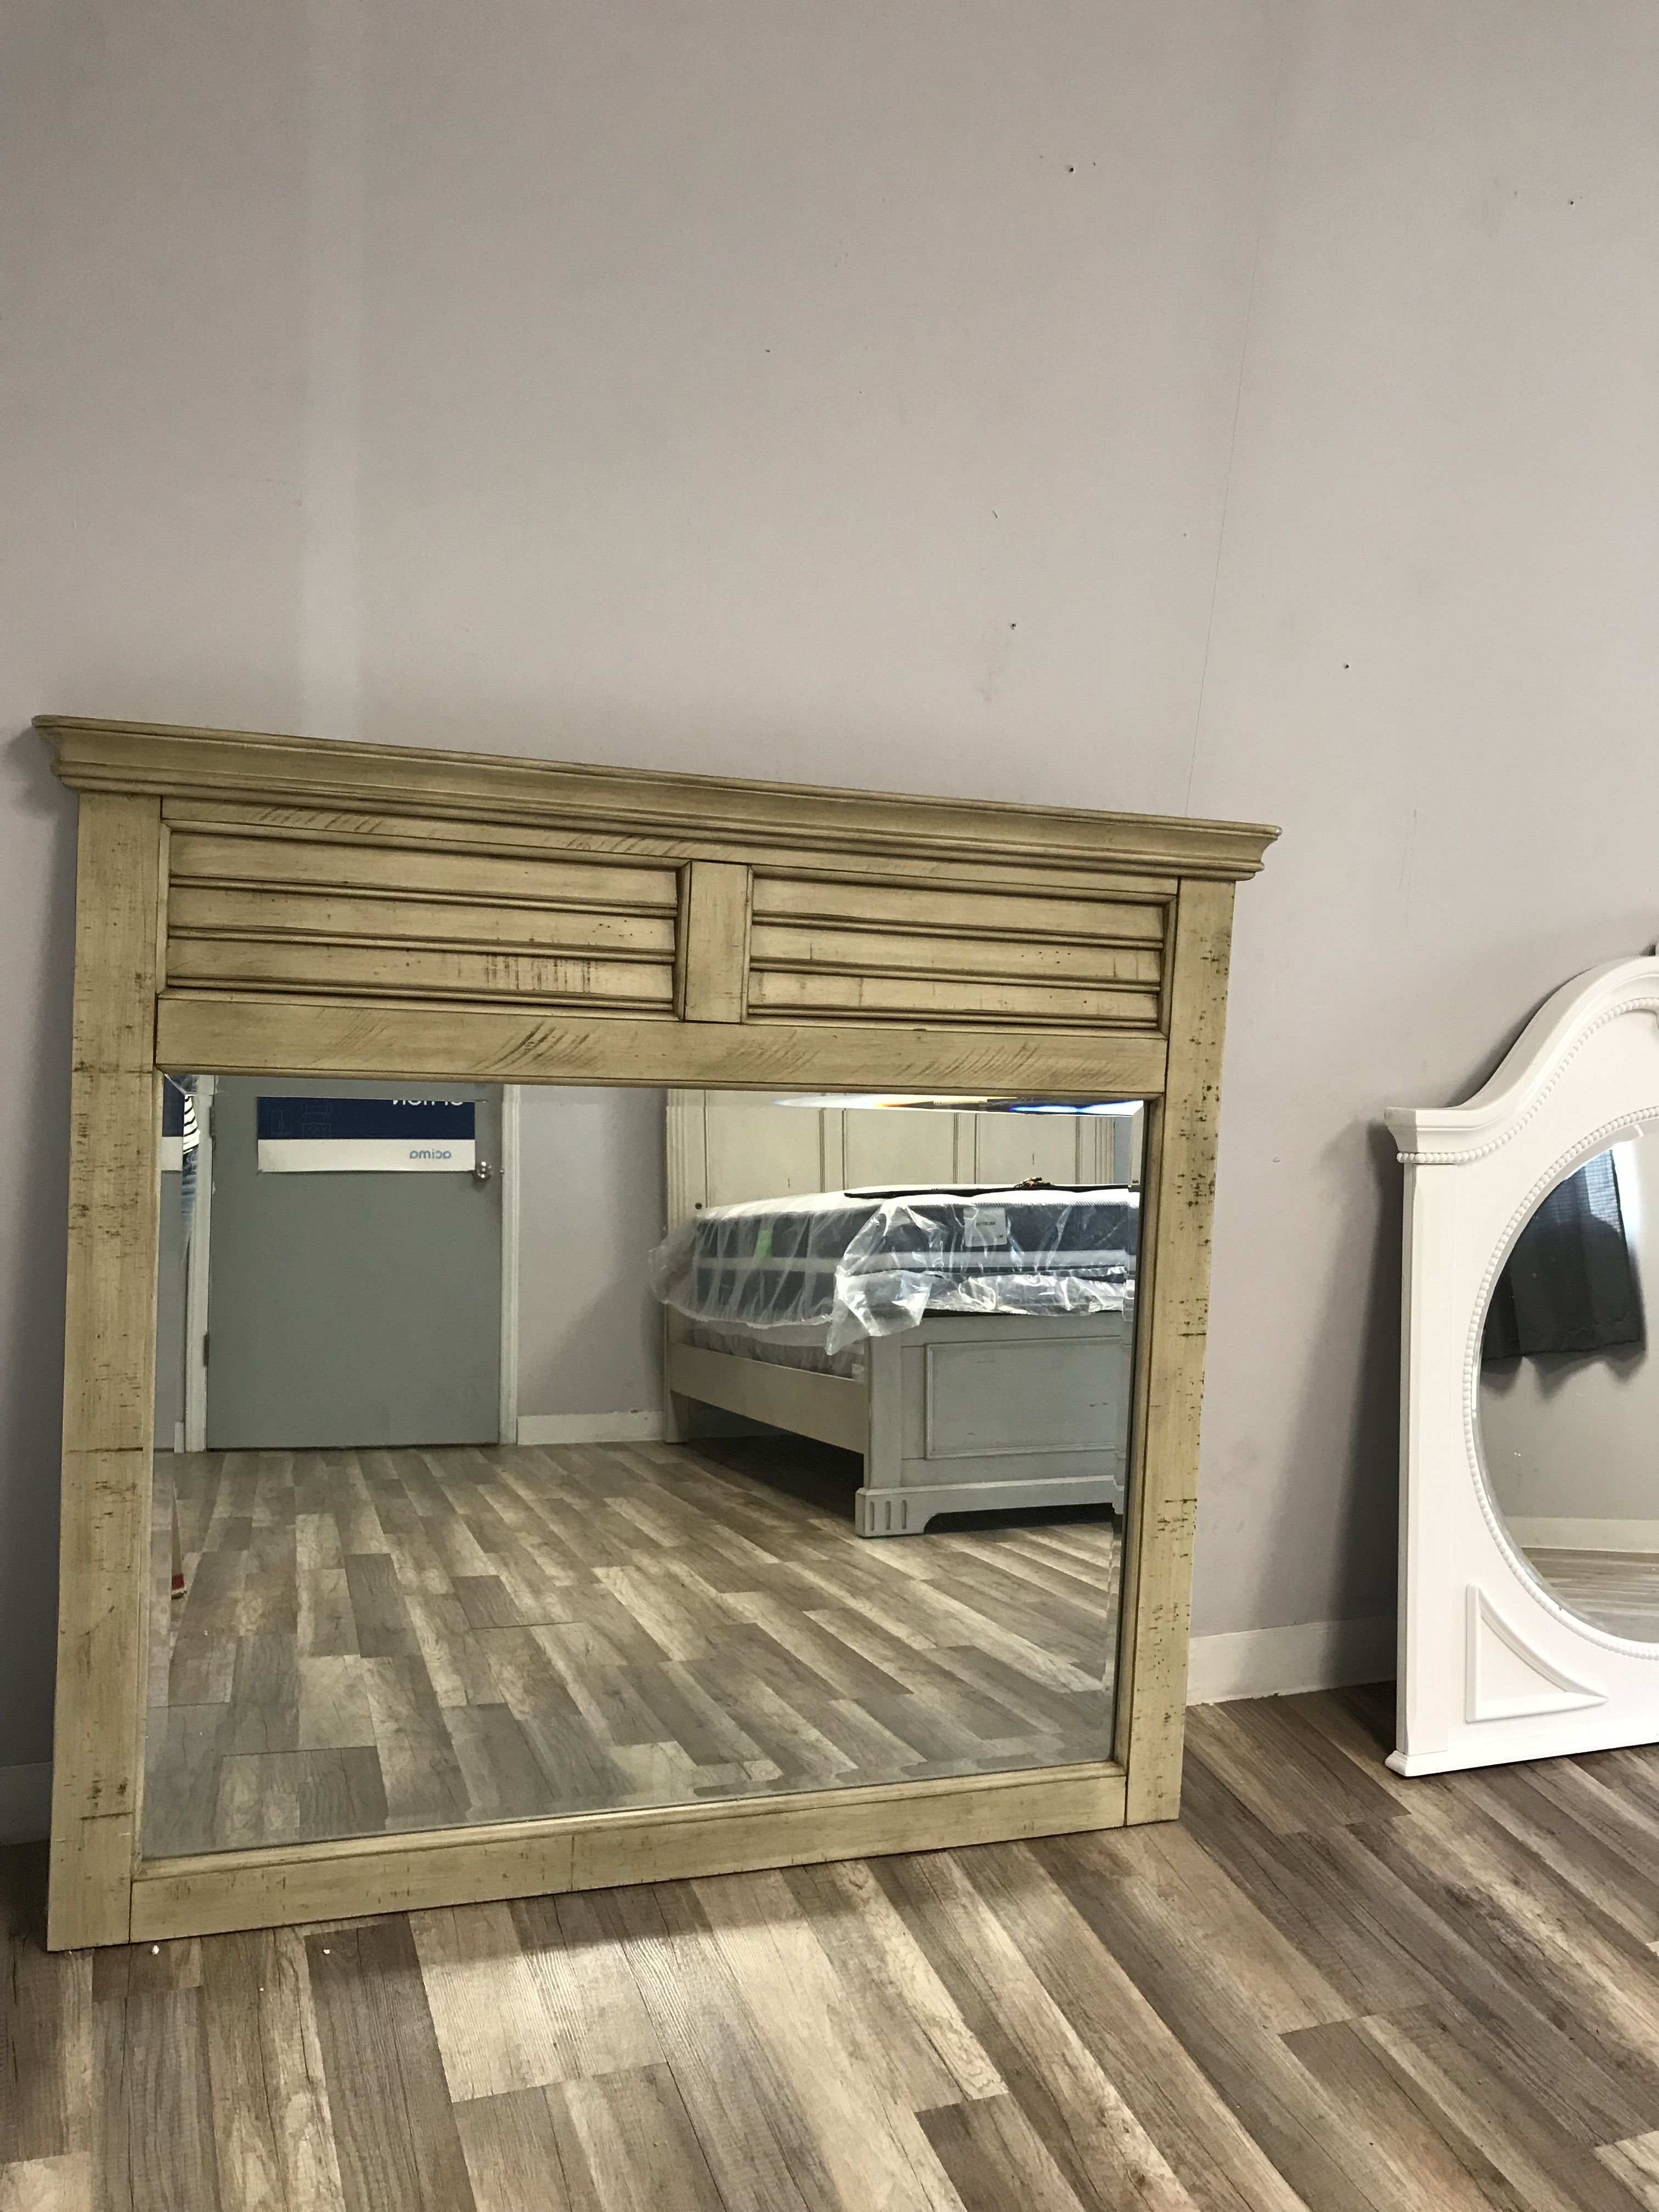 Cottage Panel Mirror - Brand New